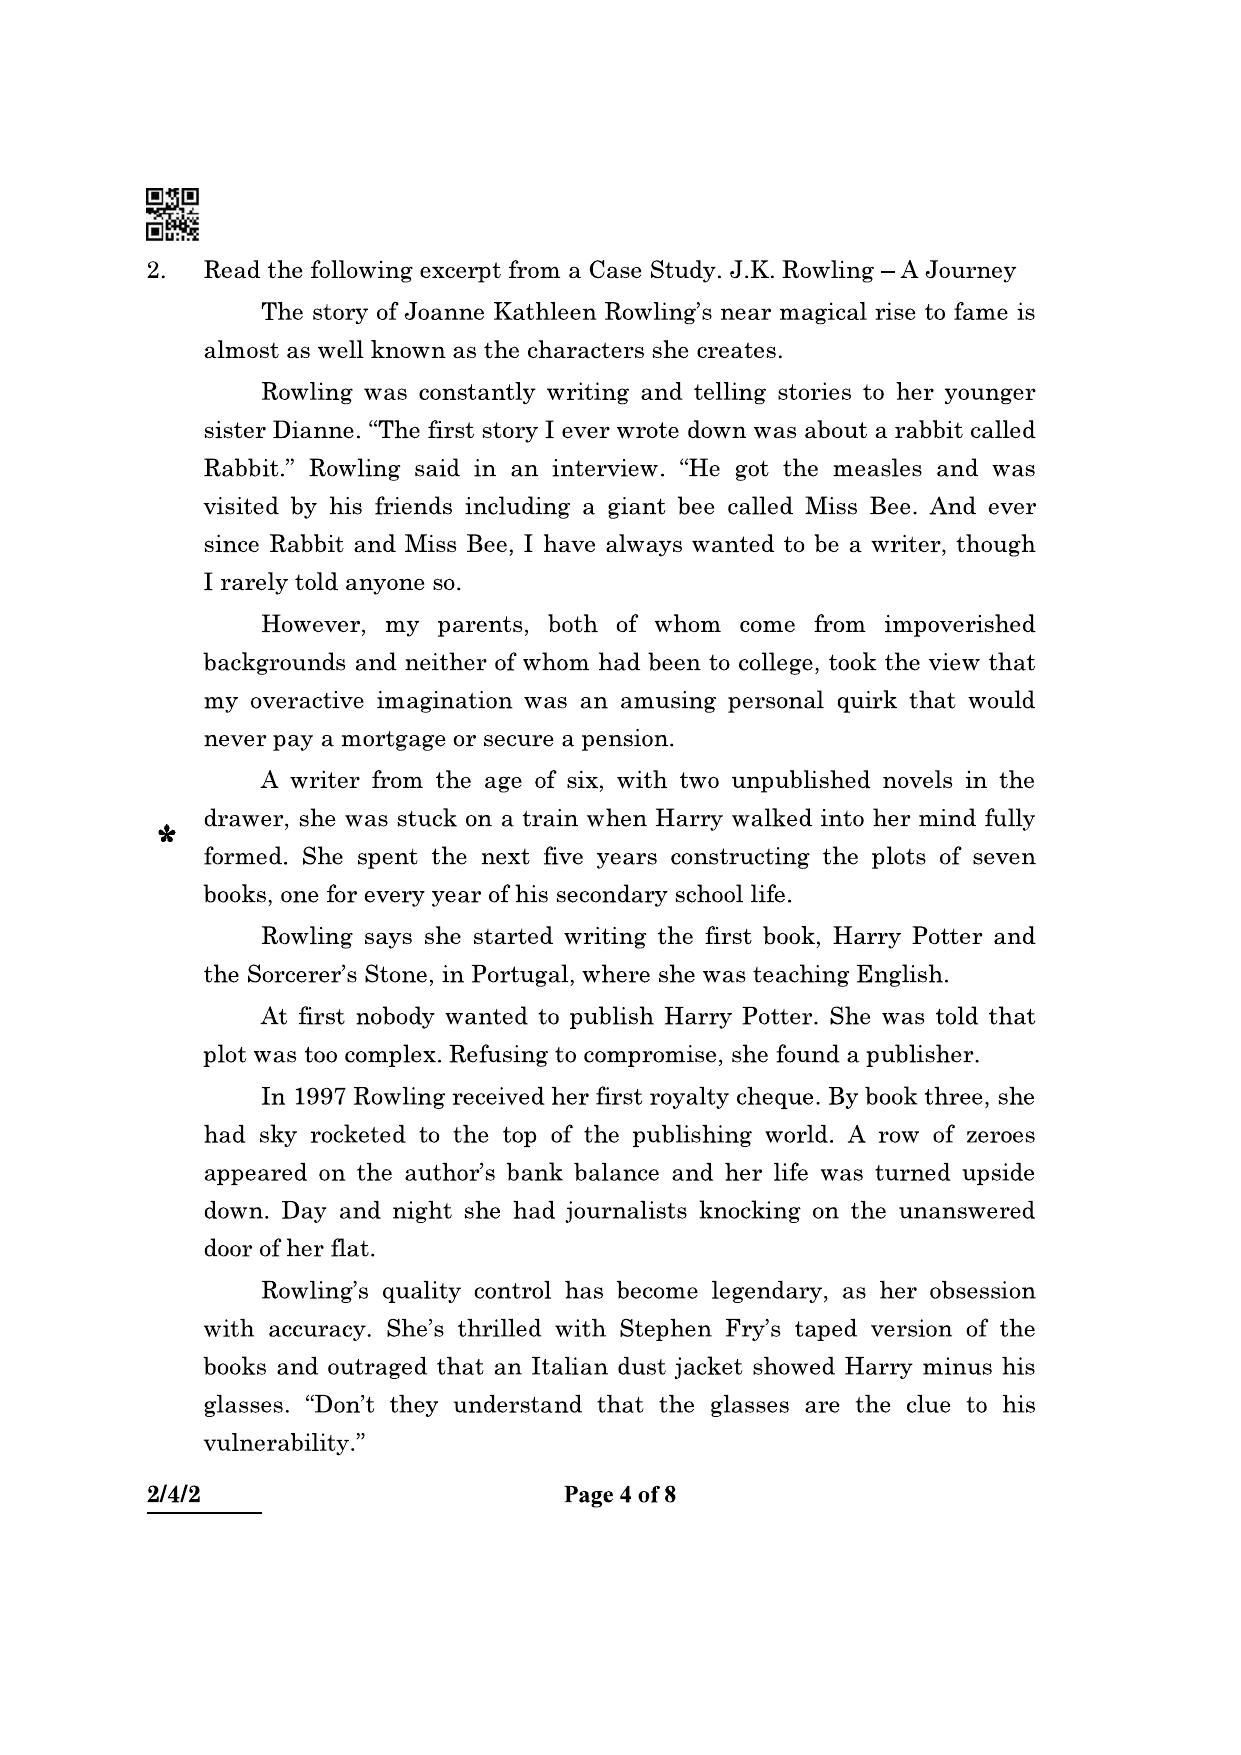 CBSE Class 10 2-4-2 (English L & L) 2022 Question Paper - Page 4